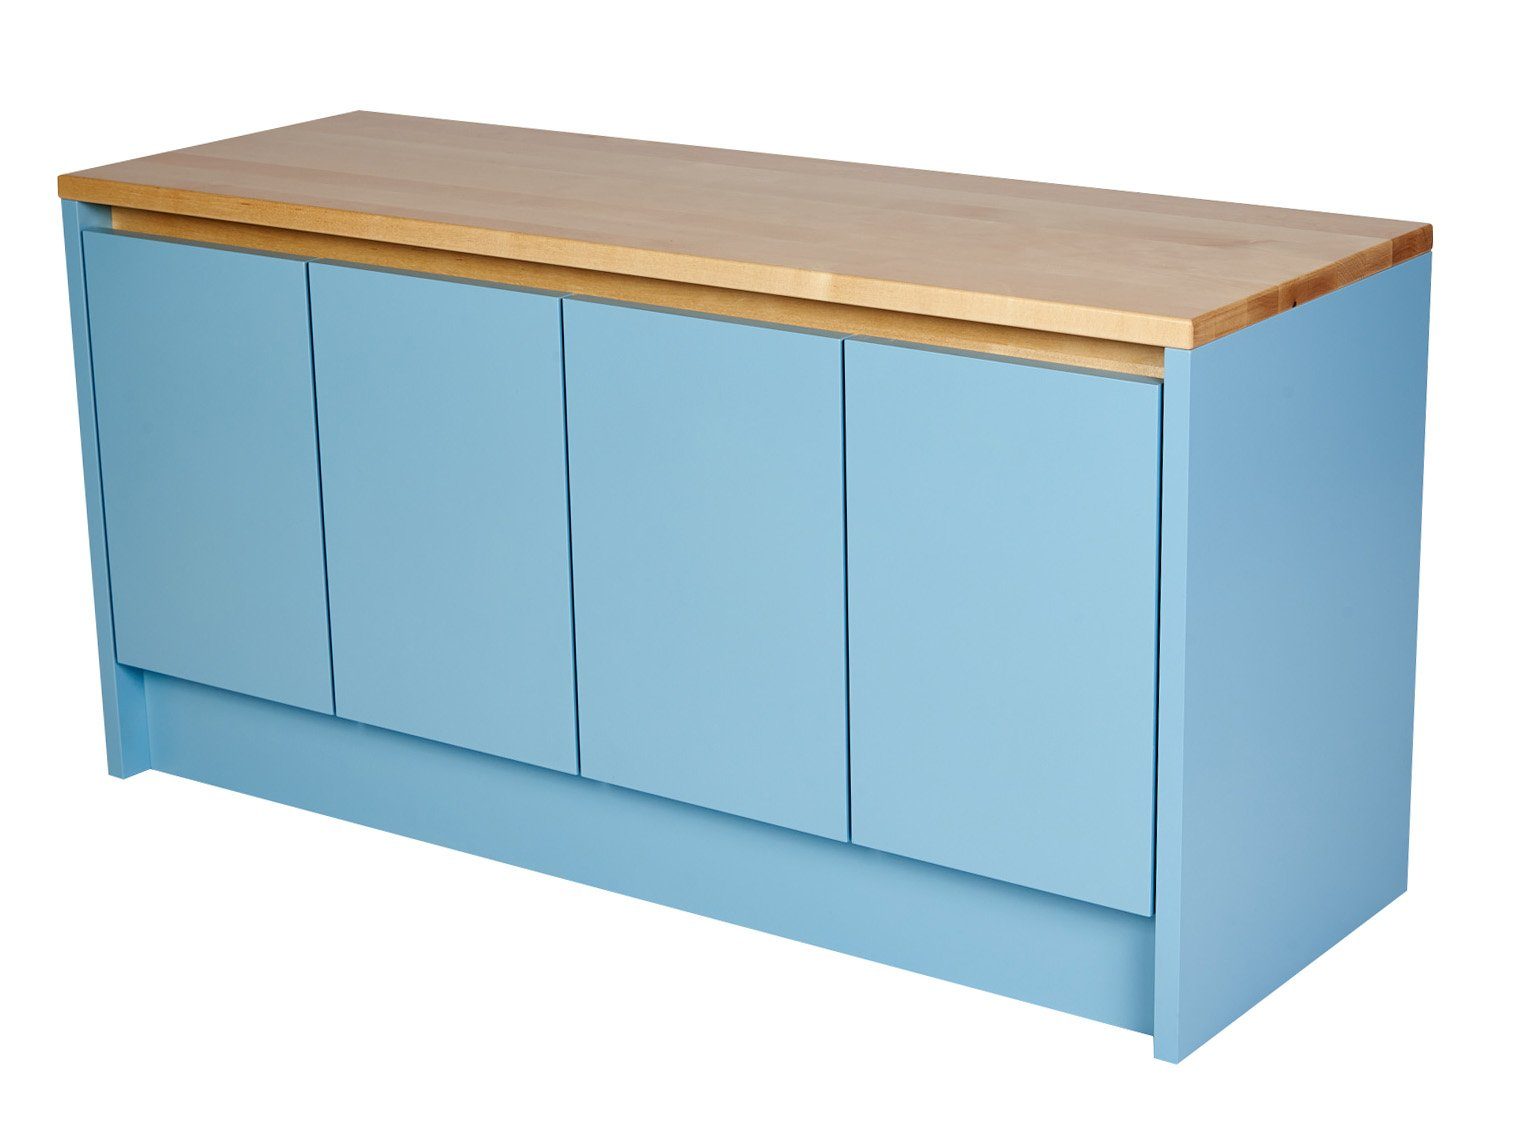 Blau mit Pastell 4 Schuhbank Garderobenbank, montiert Schuhregal, home fertig kundler Türen, Schuhschrank